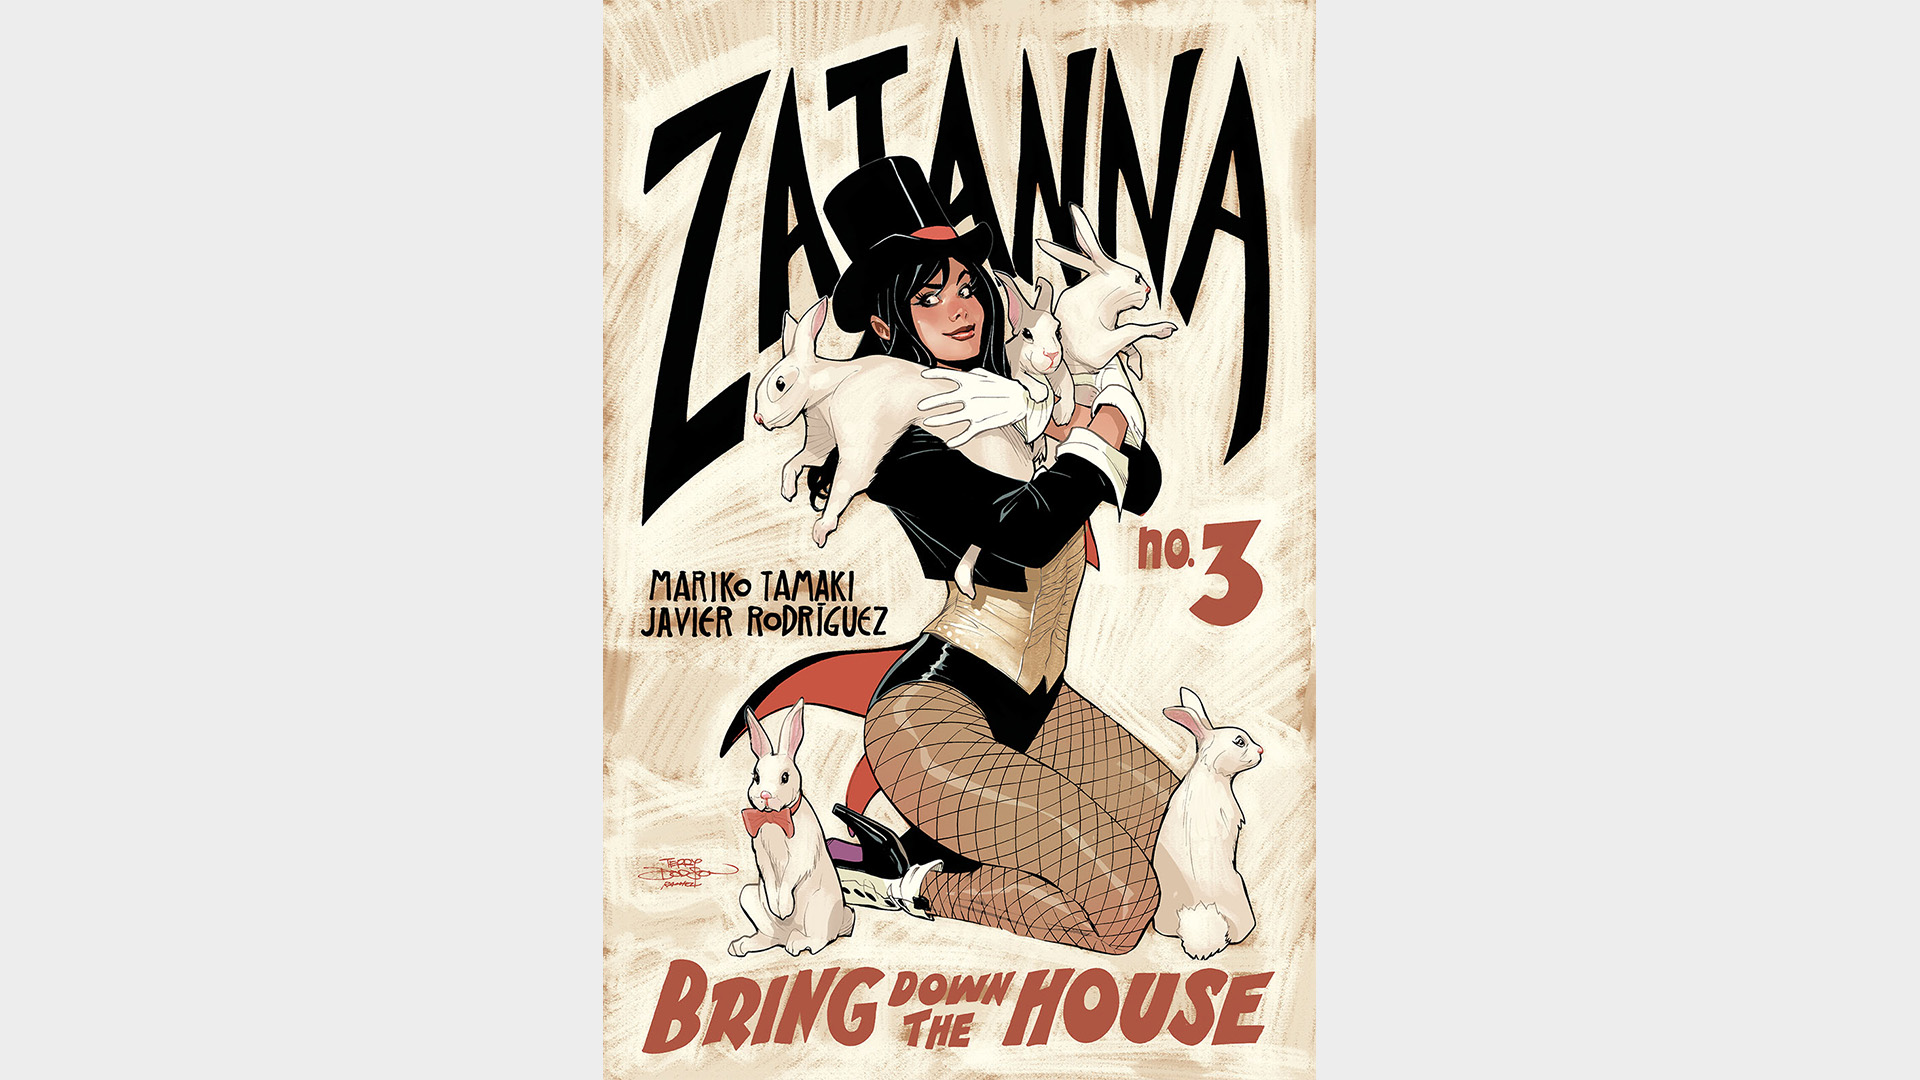 ZATANNA: BRING DOWN THE HOUSE #3